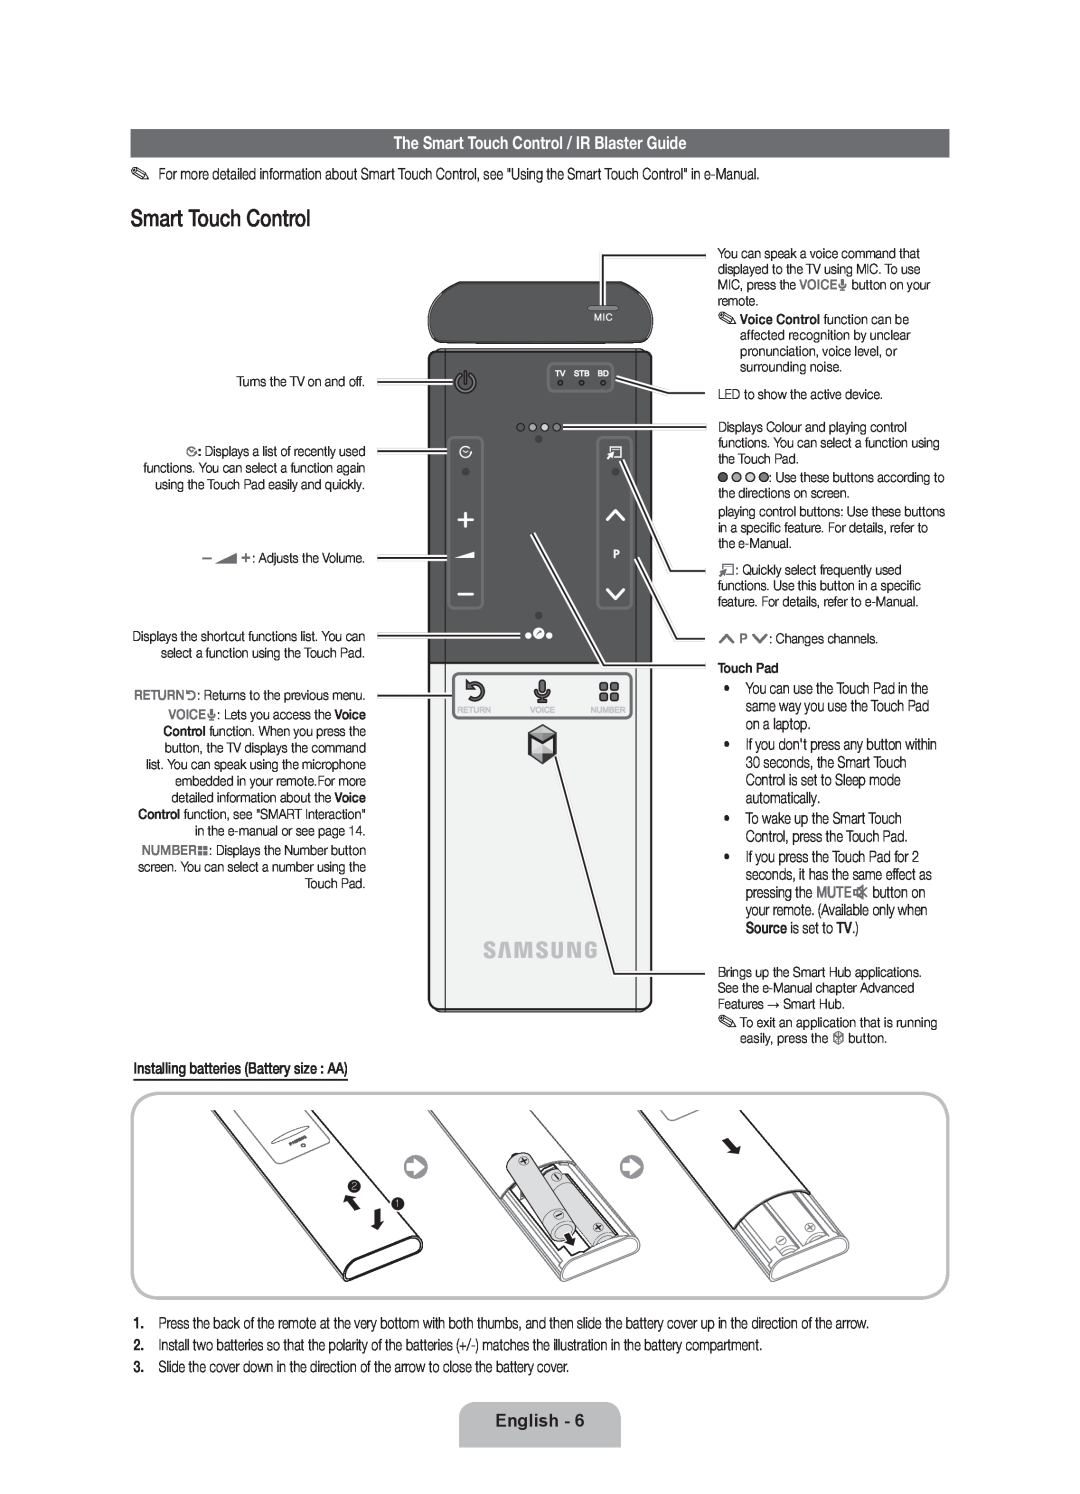 Samsung UE46ES8000SXZF, UE46ES8000SXXN, UE55ES8000SXXH manual The Smart Touch Control / IR Blaster Guide, English 